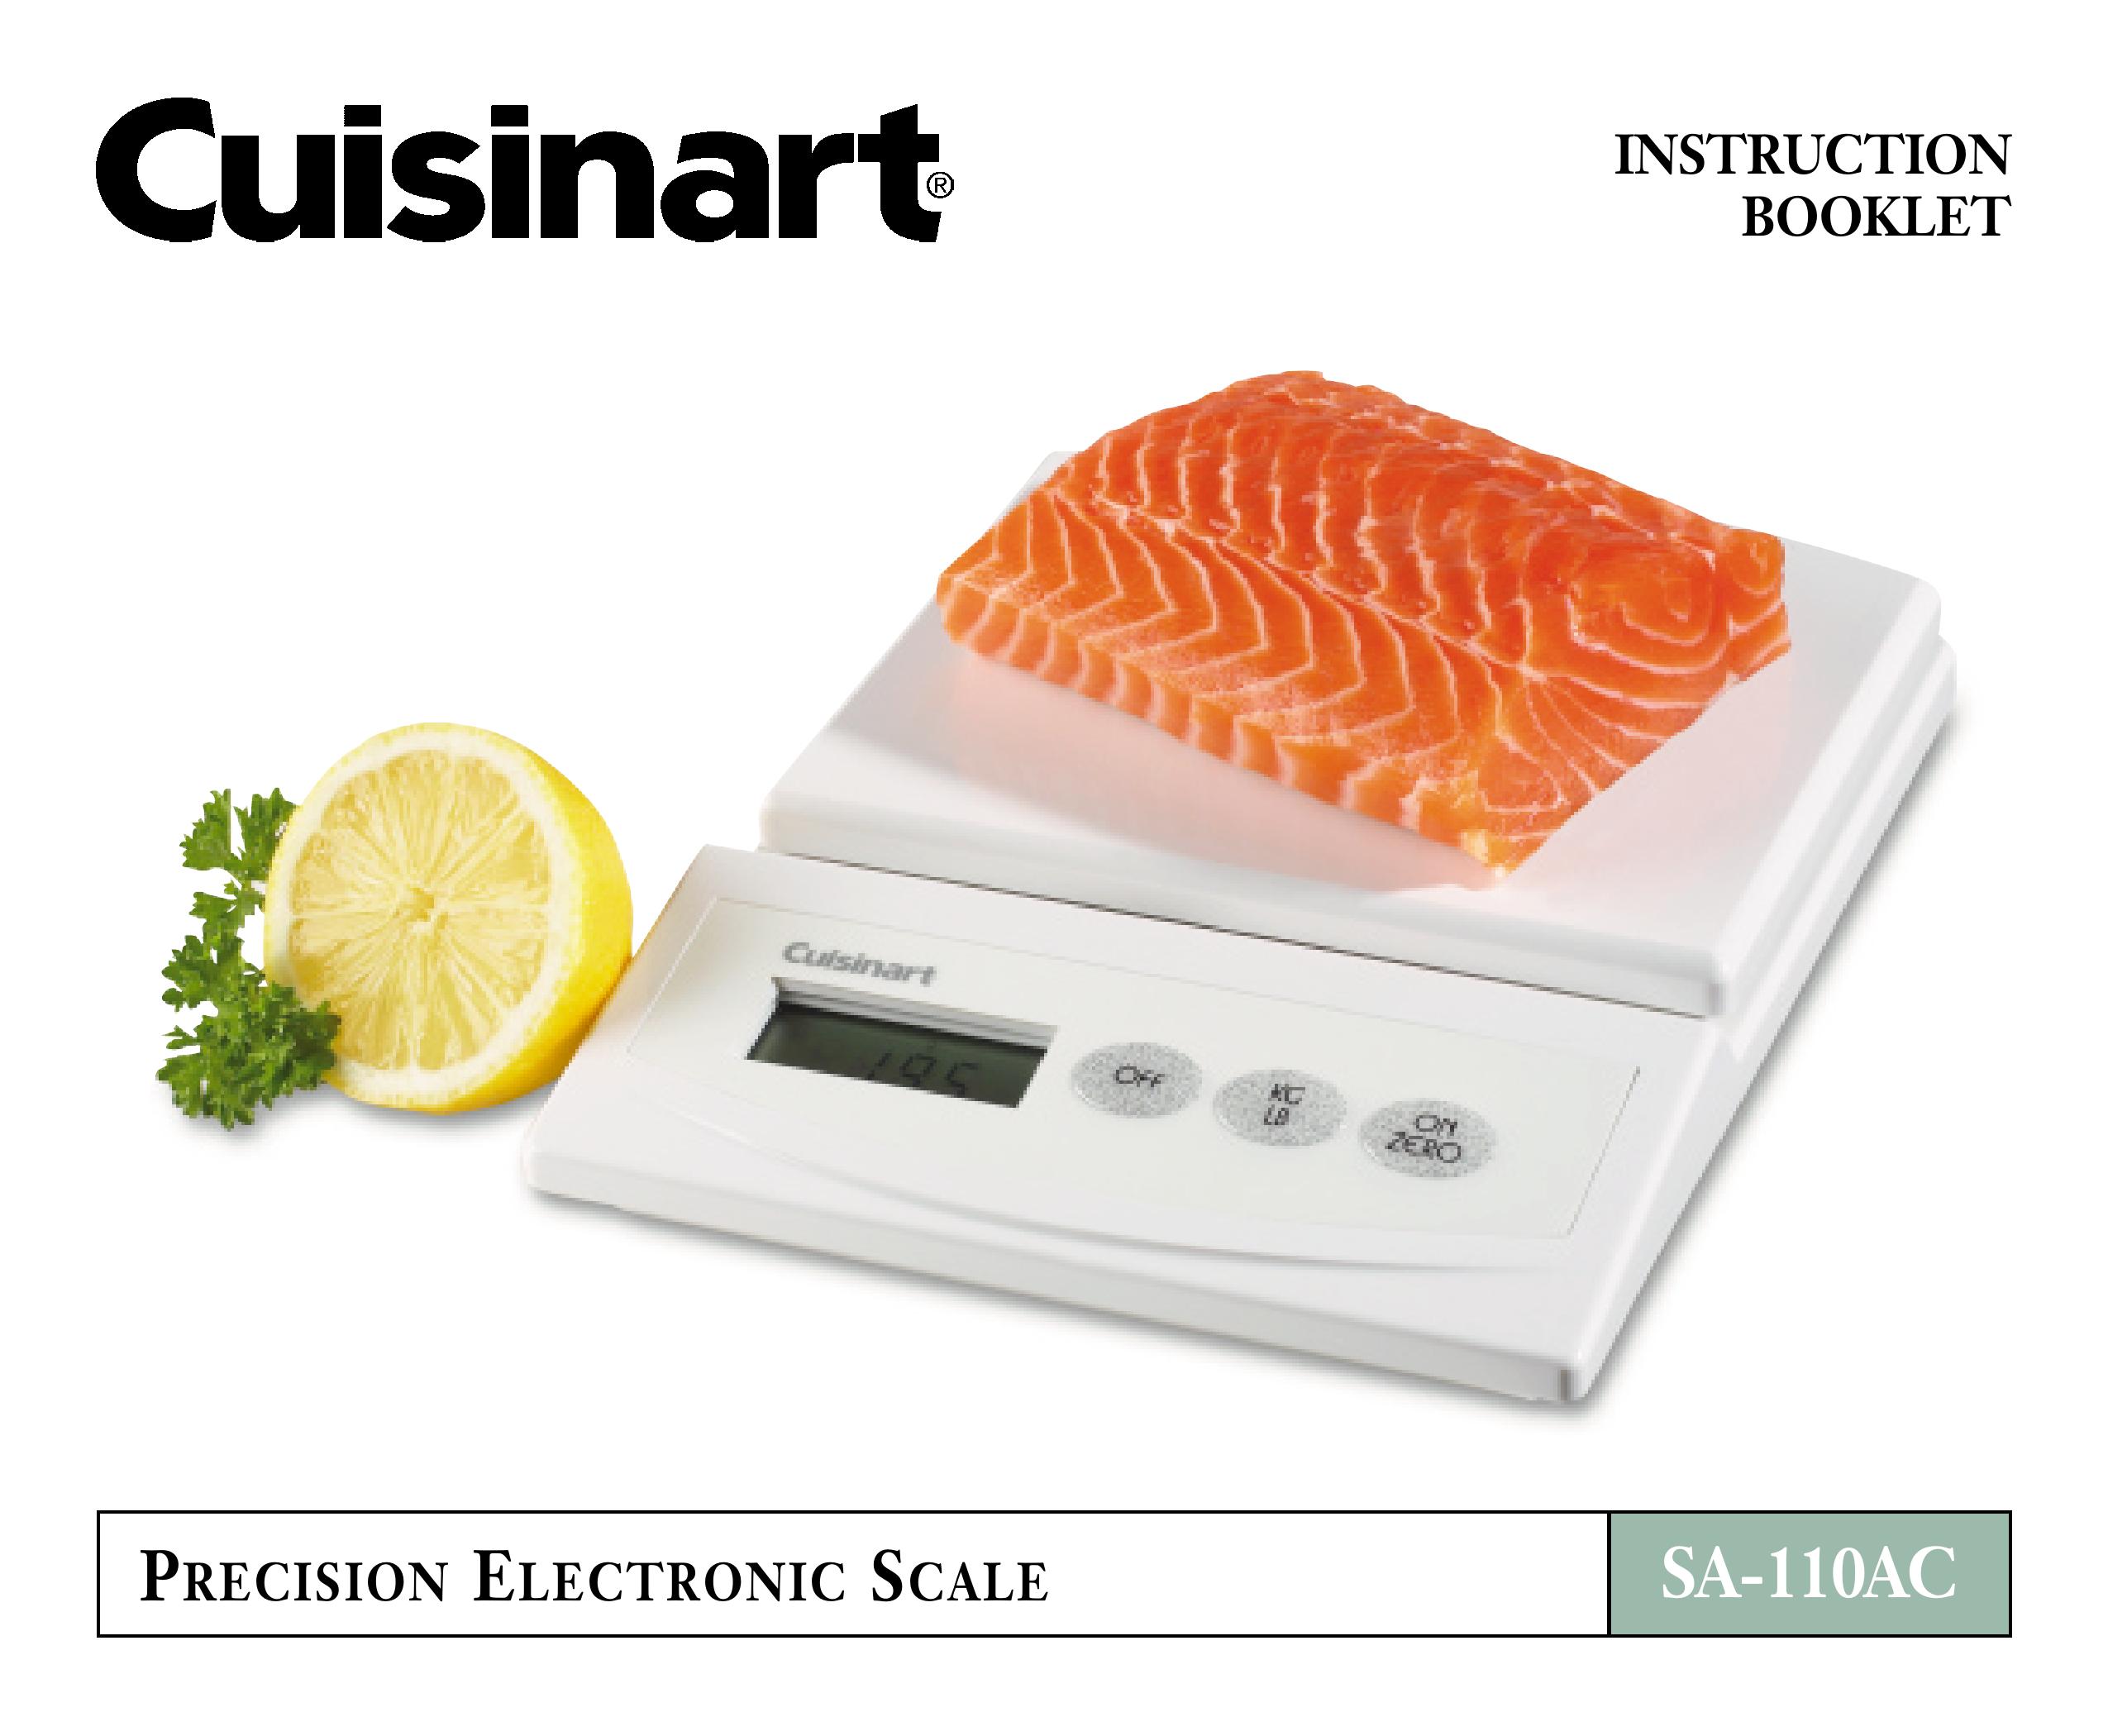 Cuisinart SA-110AC Scale User Manual